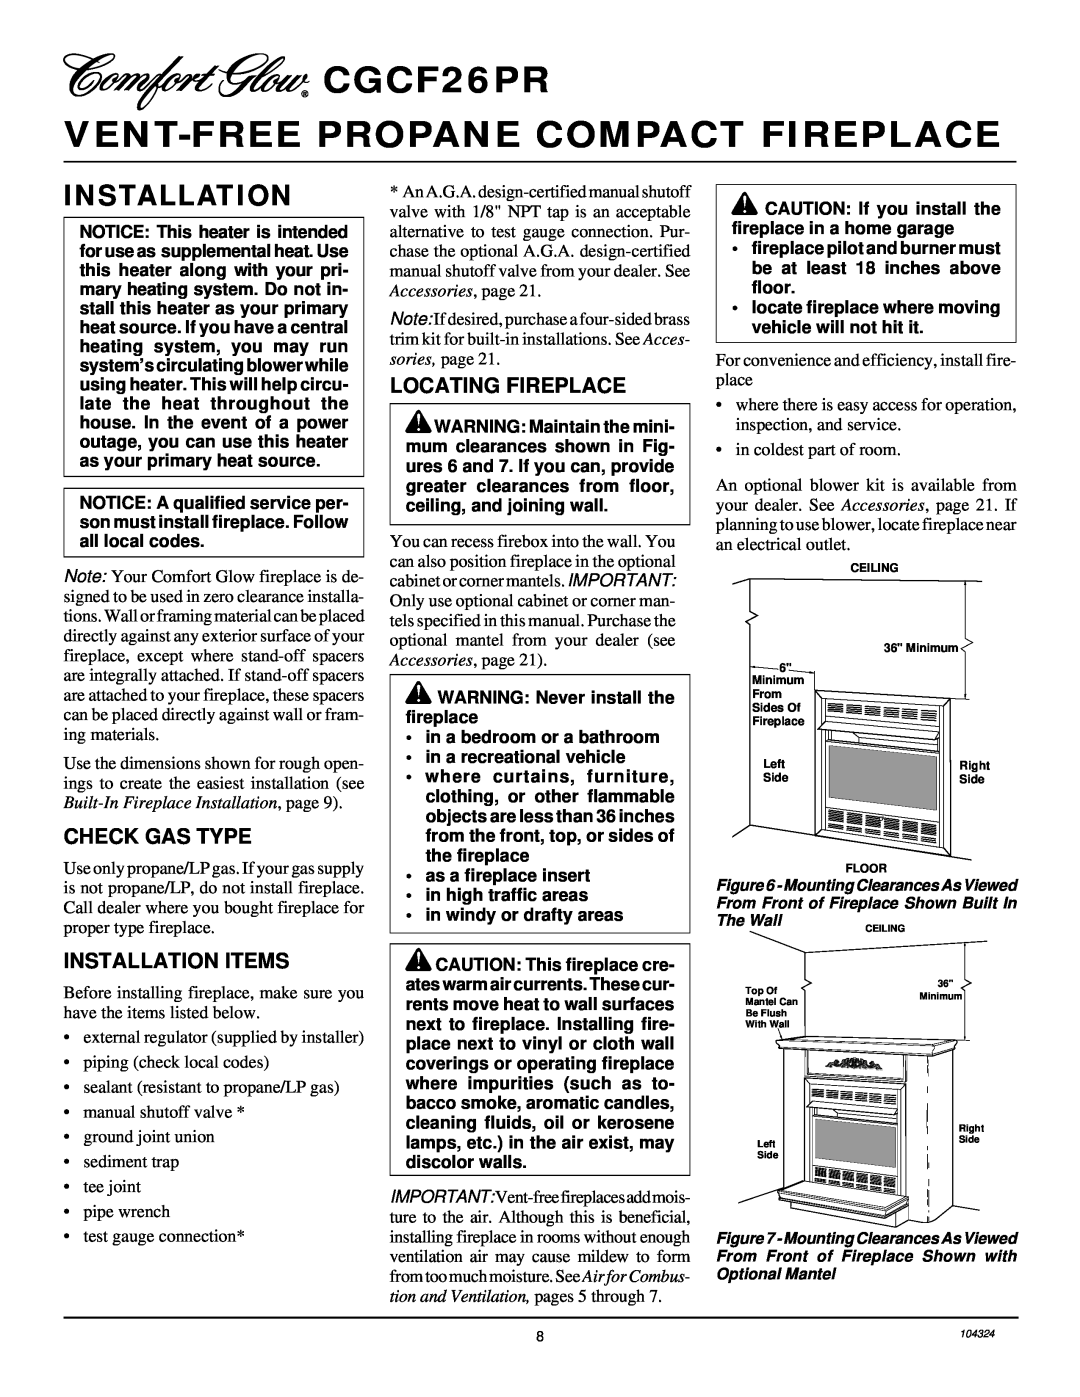 Desa Check Gas Type, Installation Items, Locating Fireplace, CGCF26PR VENT-FREEPROPANE COMPACT FIREPLACE 